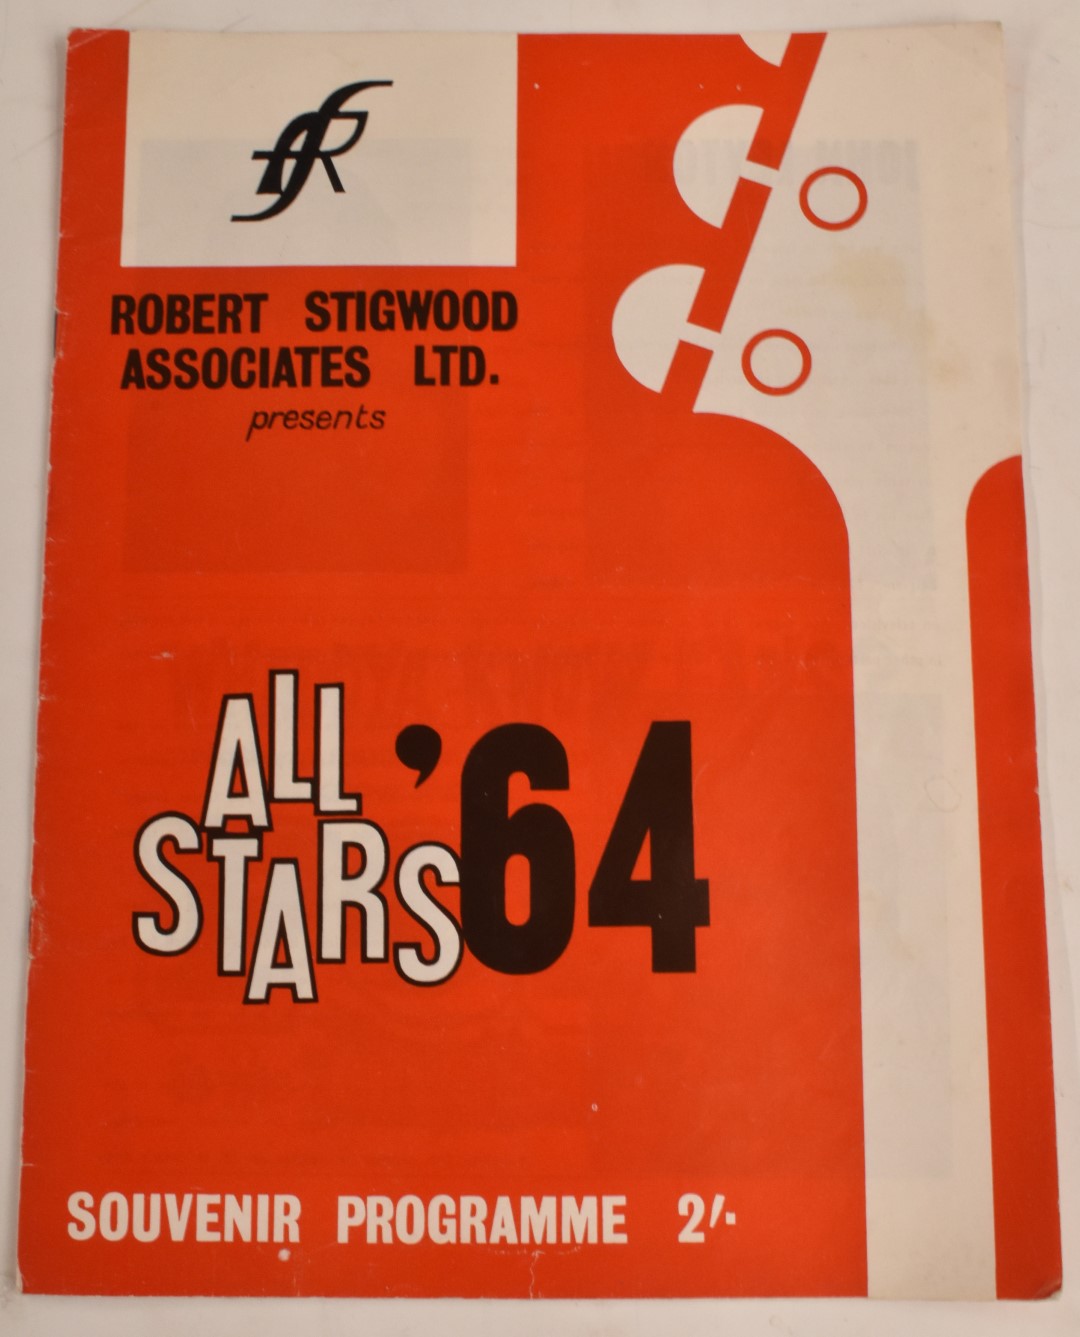 Robert Stigwood Associates Ltd presents All Stars '64 tour programmes, the tour featured The Rolling